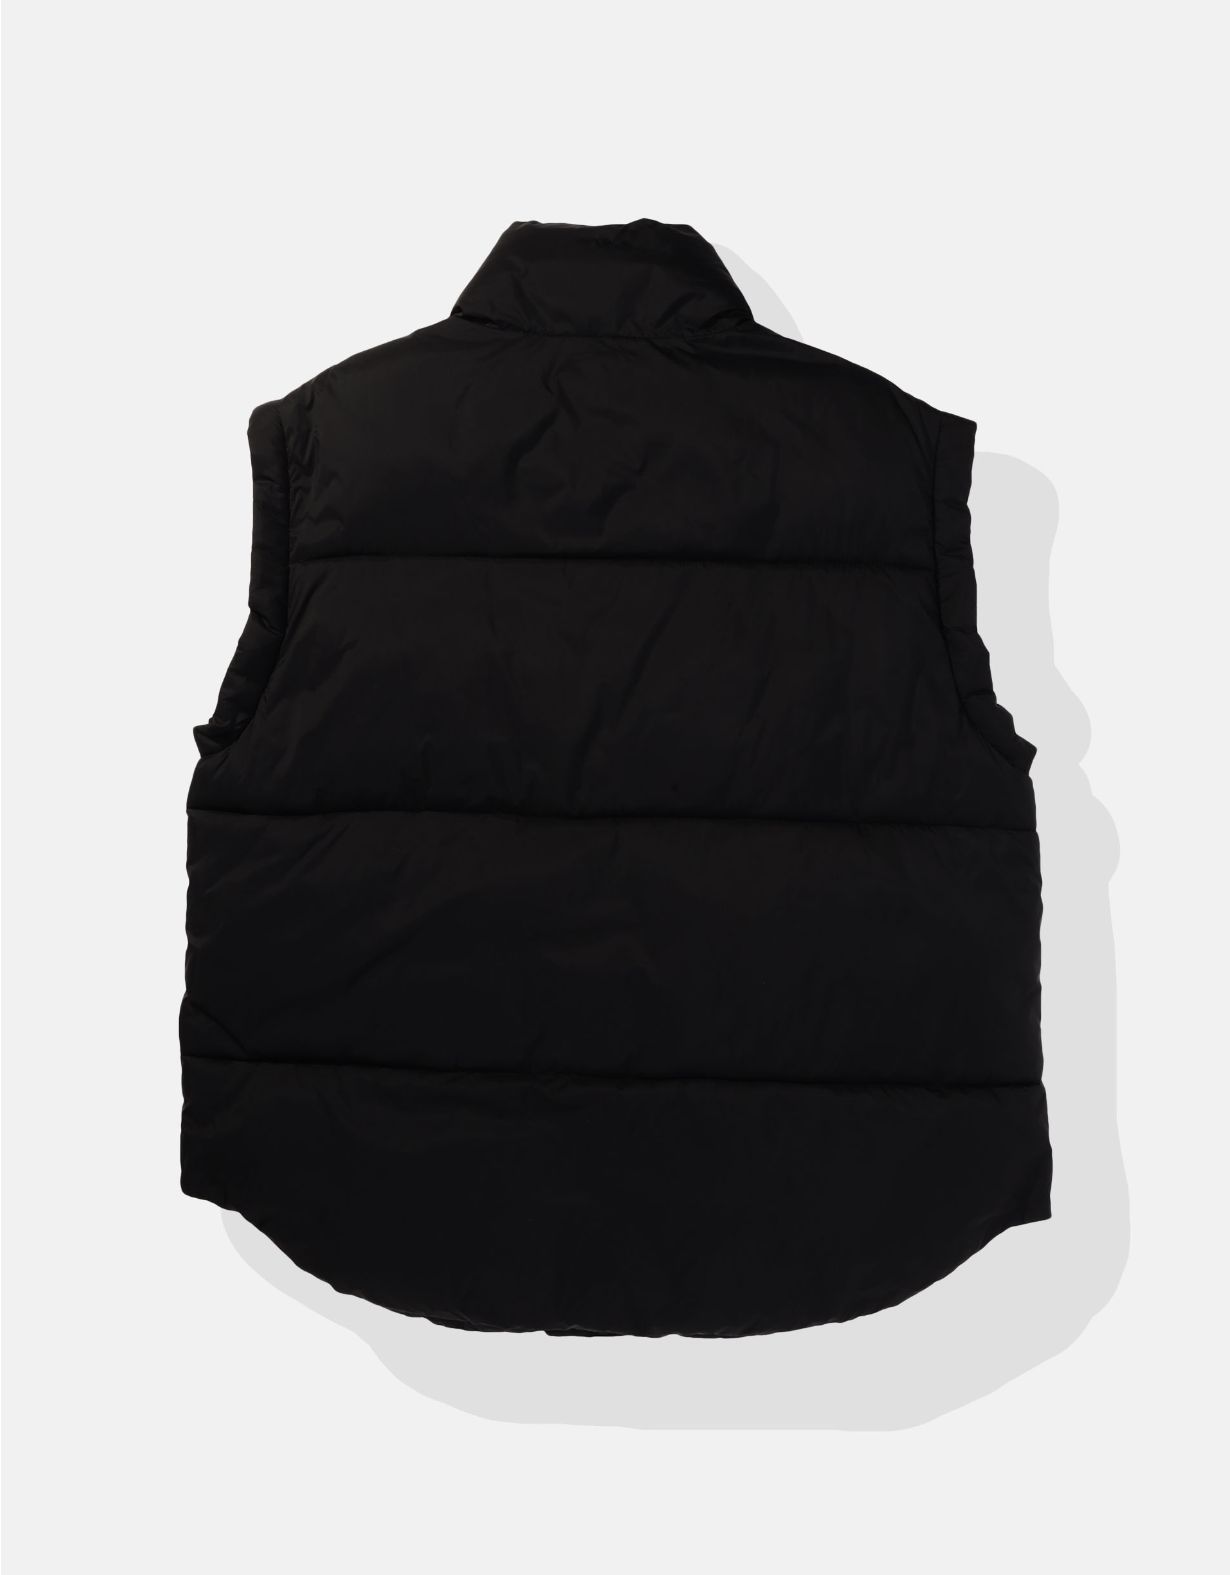 OFFLINE By Aerie Oversized Puffer Vest